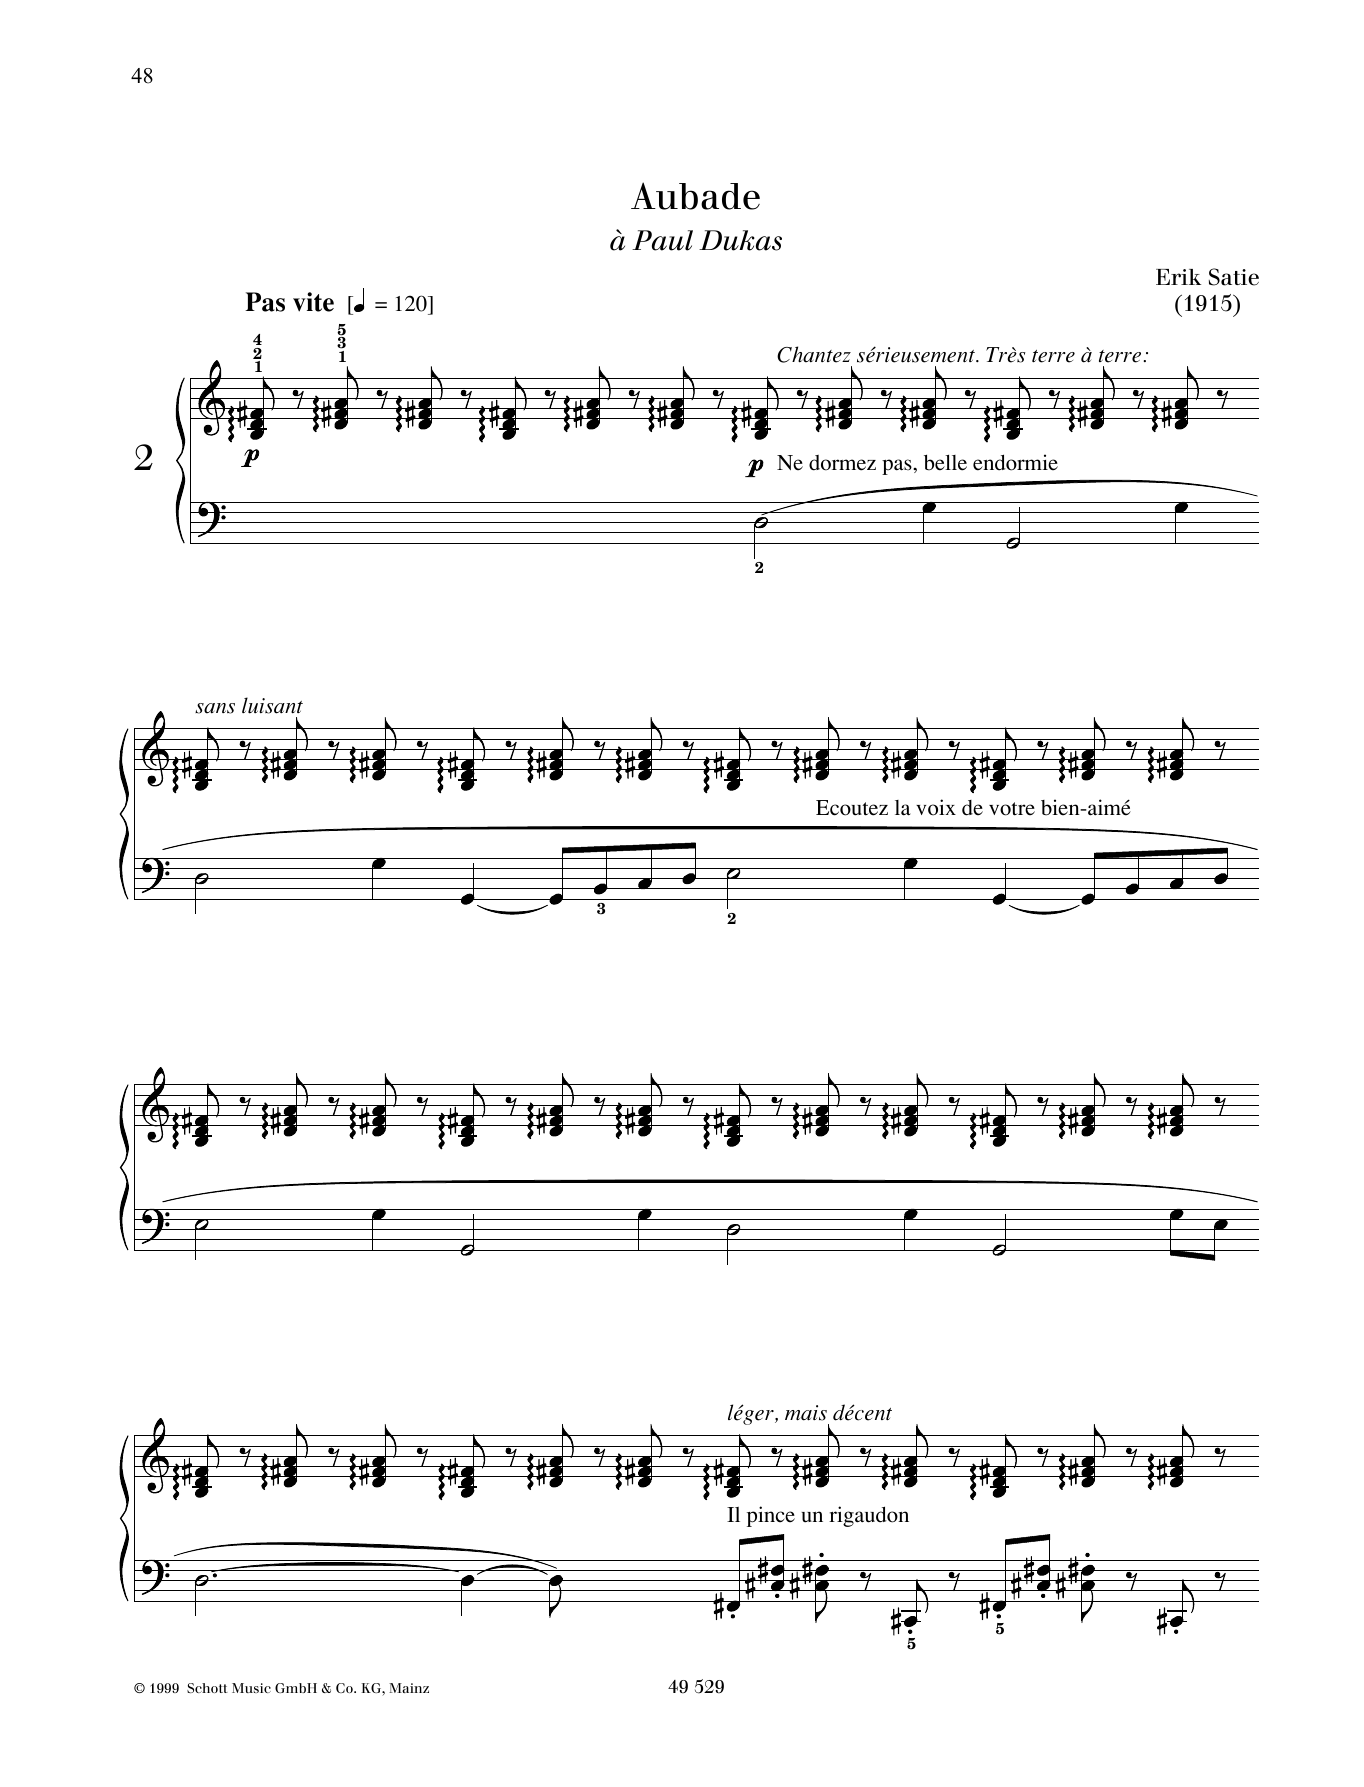 Download Erik Satie Aubade Sheet Music